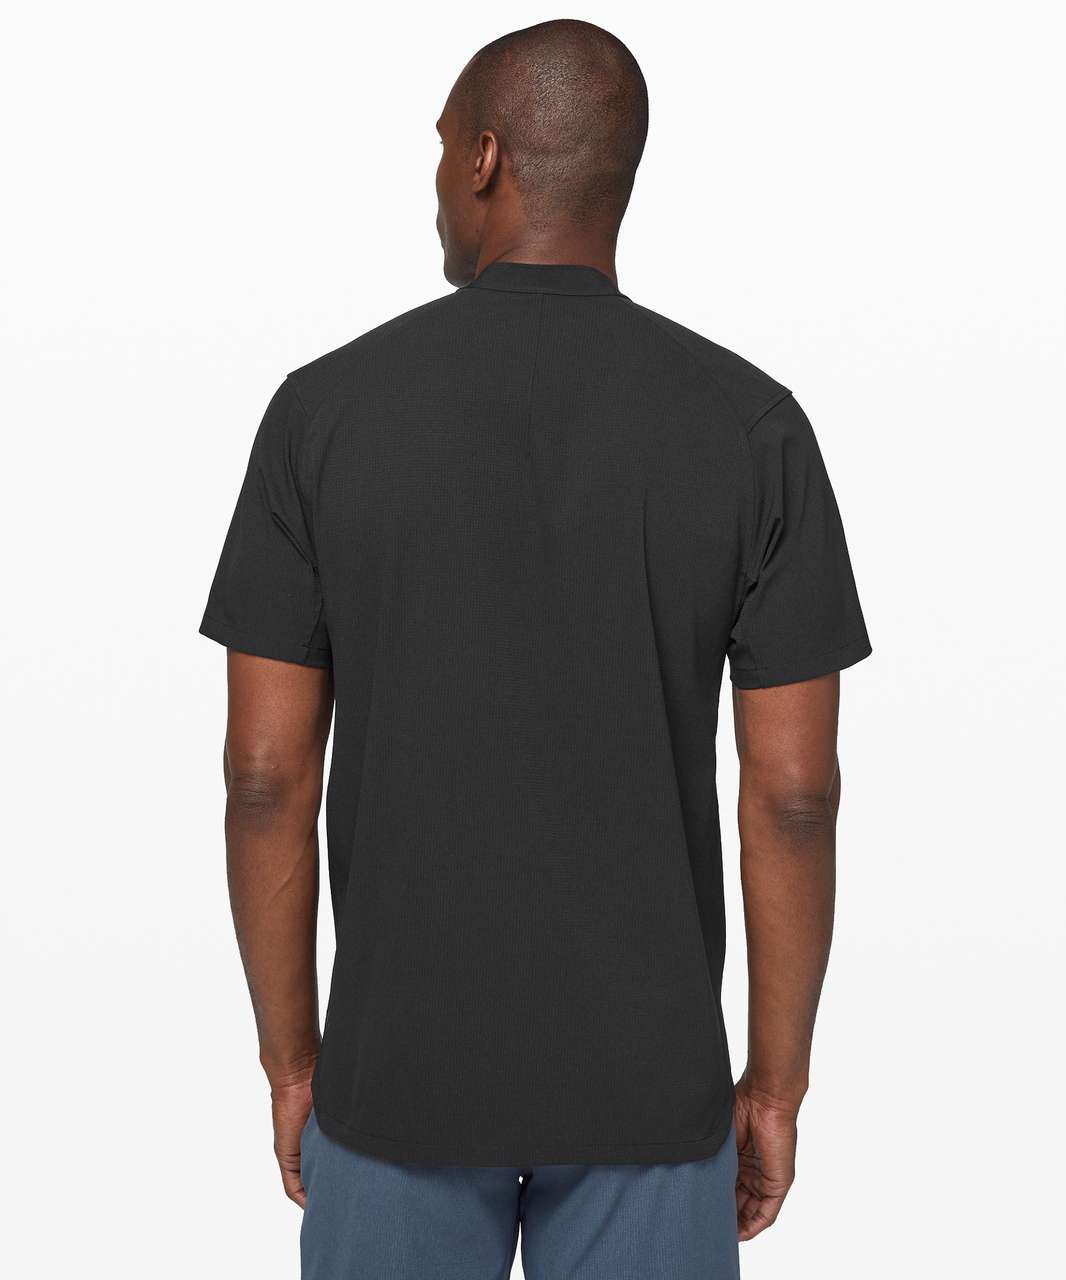 Lululemon Daily Drift Short Sleeve Shirt - Black